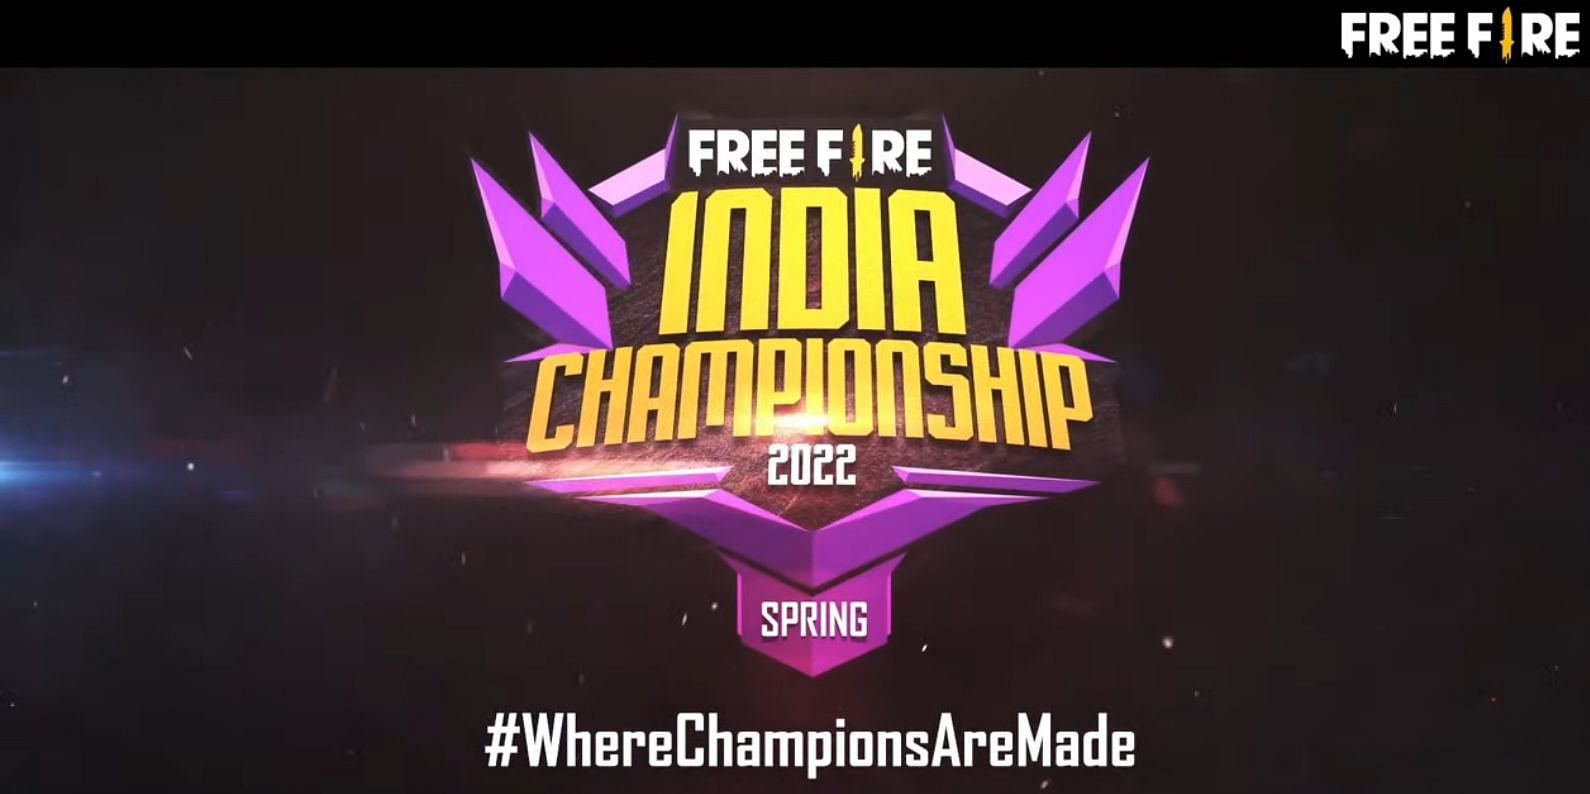 Free Fire India Championship 2022 Spring (Image via Garena)